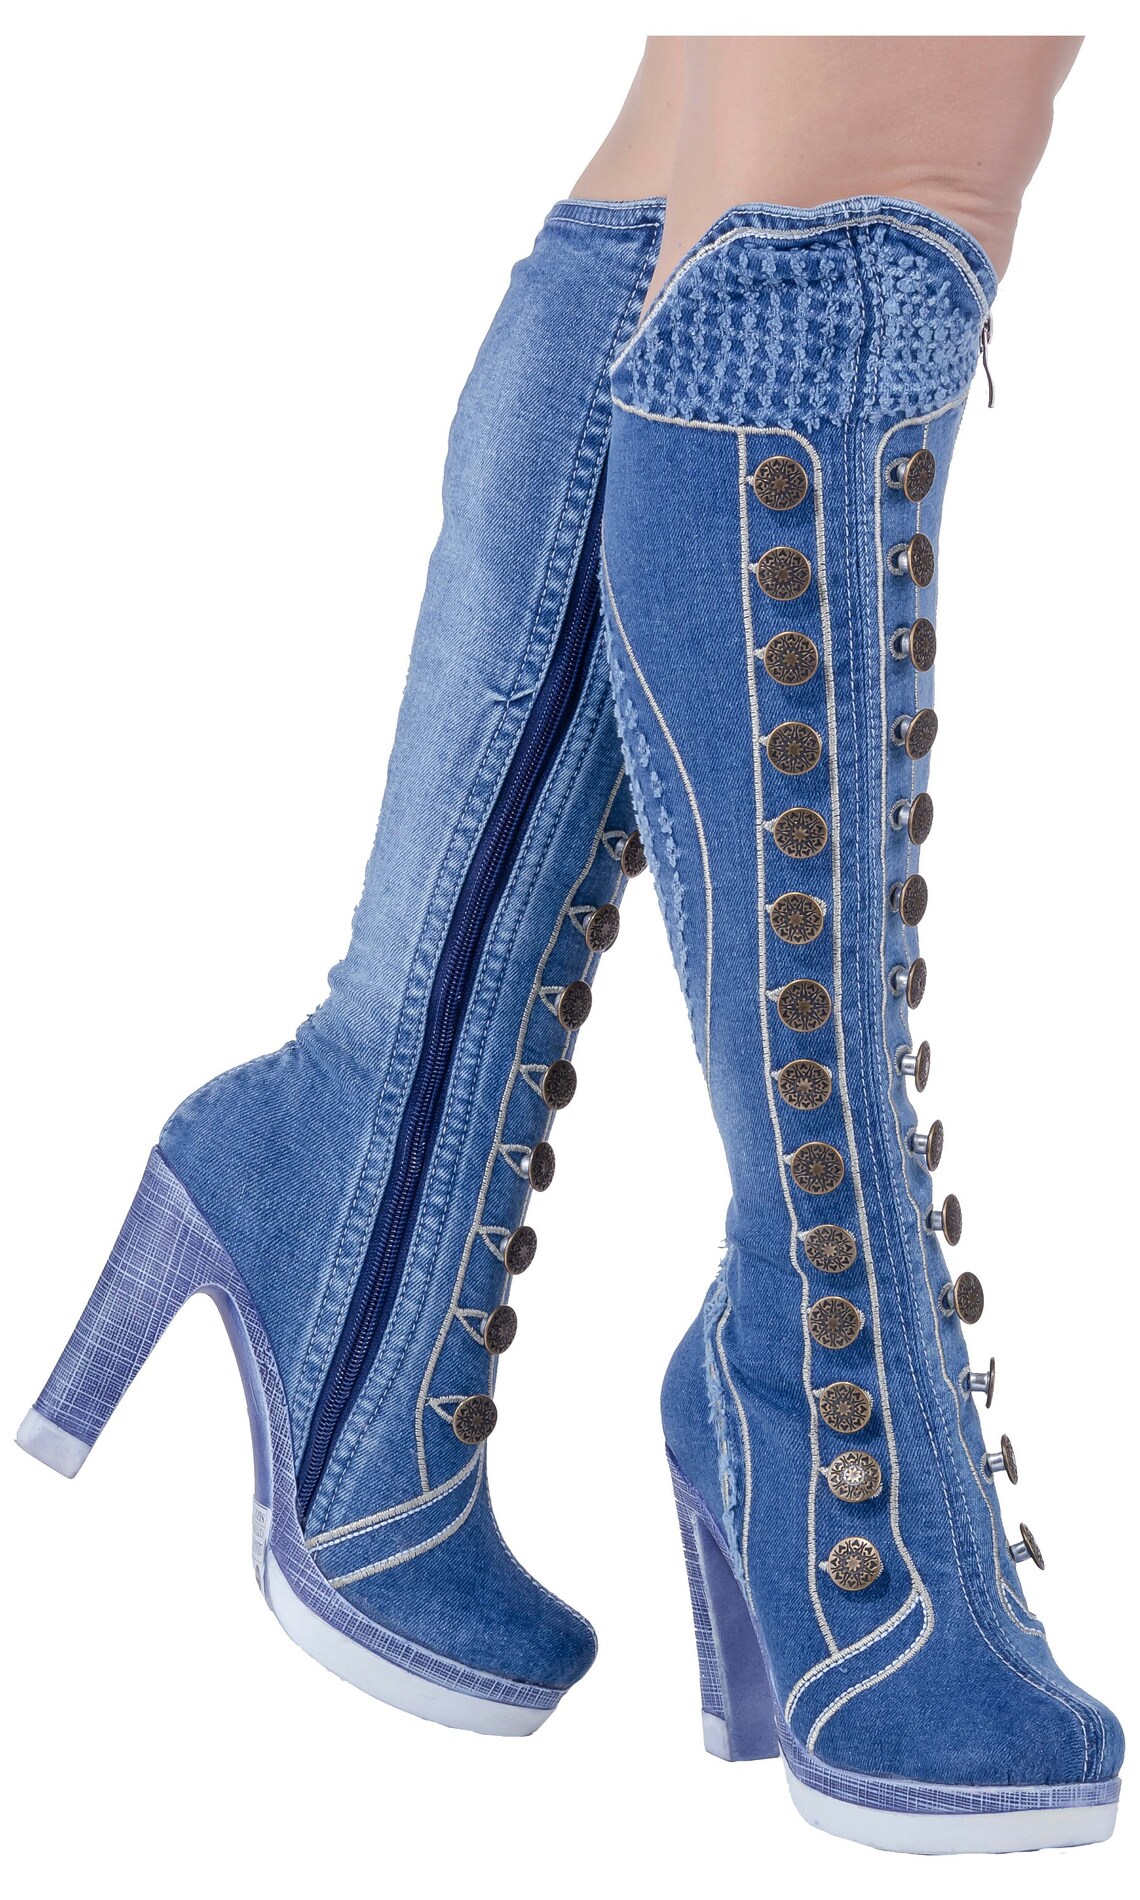 Denim Fabric Women Jeans Boot - Etsy